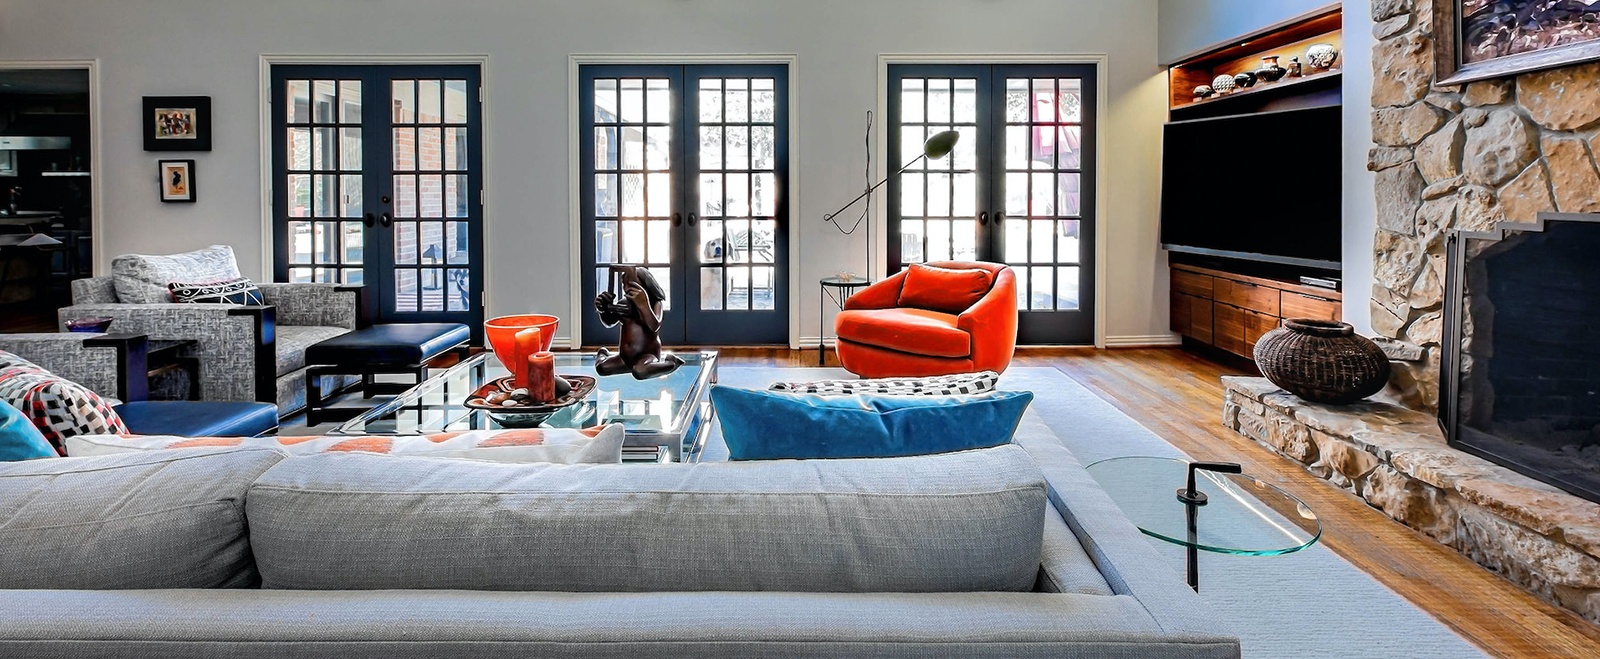 Luxurious Living Room Interior Design by Luxury Interior Designer and Stylist in Dallas